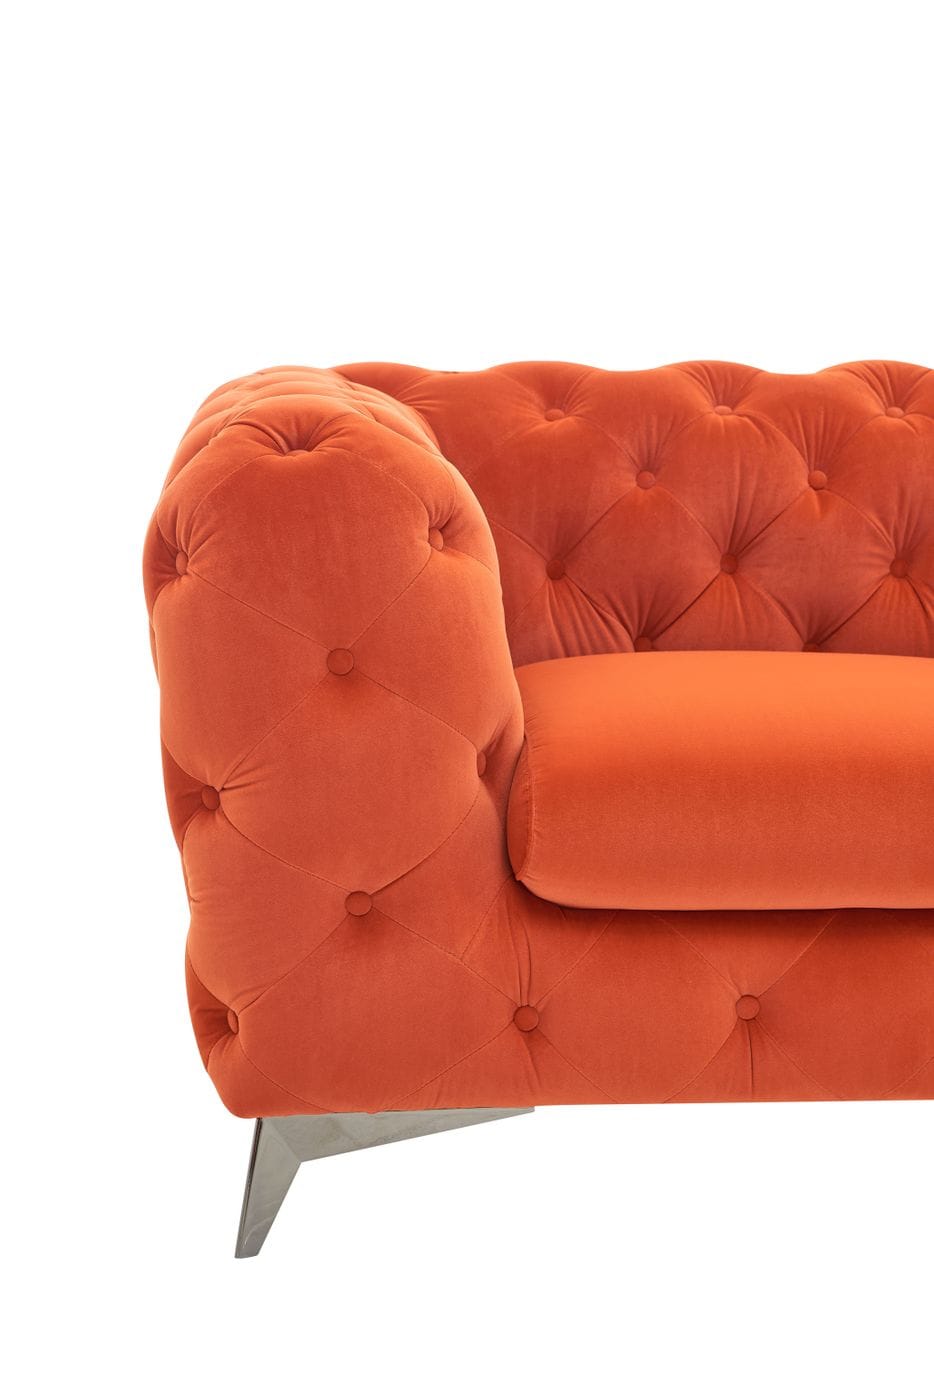 VIG Furniture Divani Casa Delilah Orange Fabric Chair